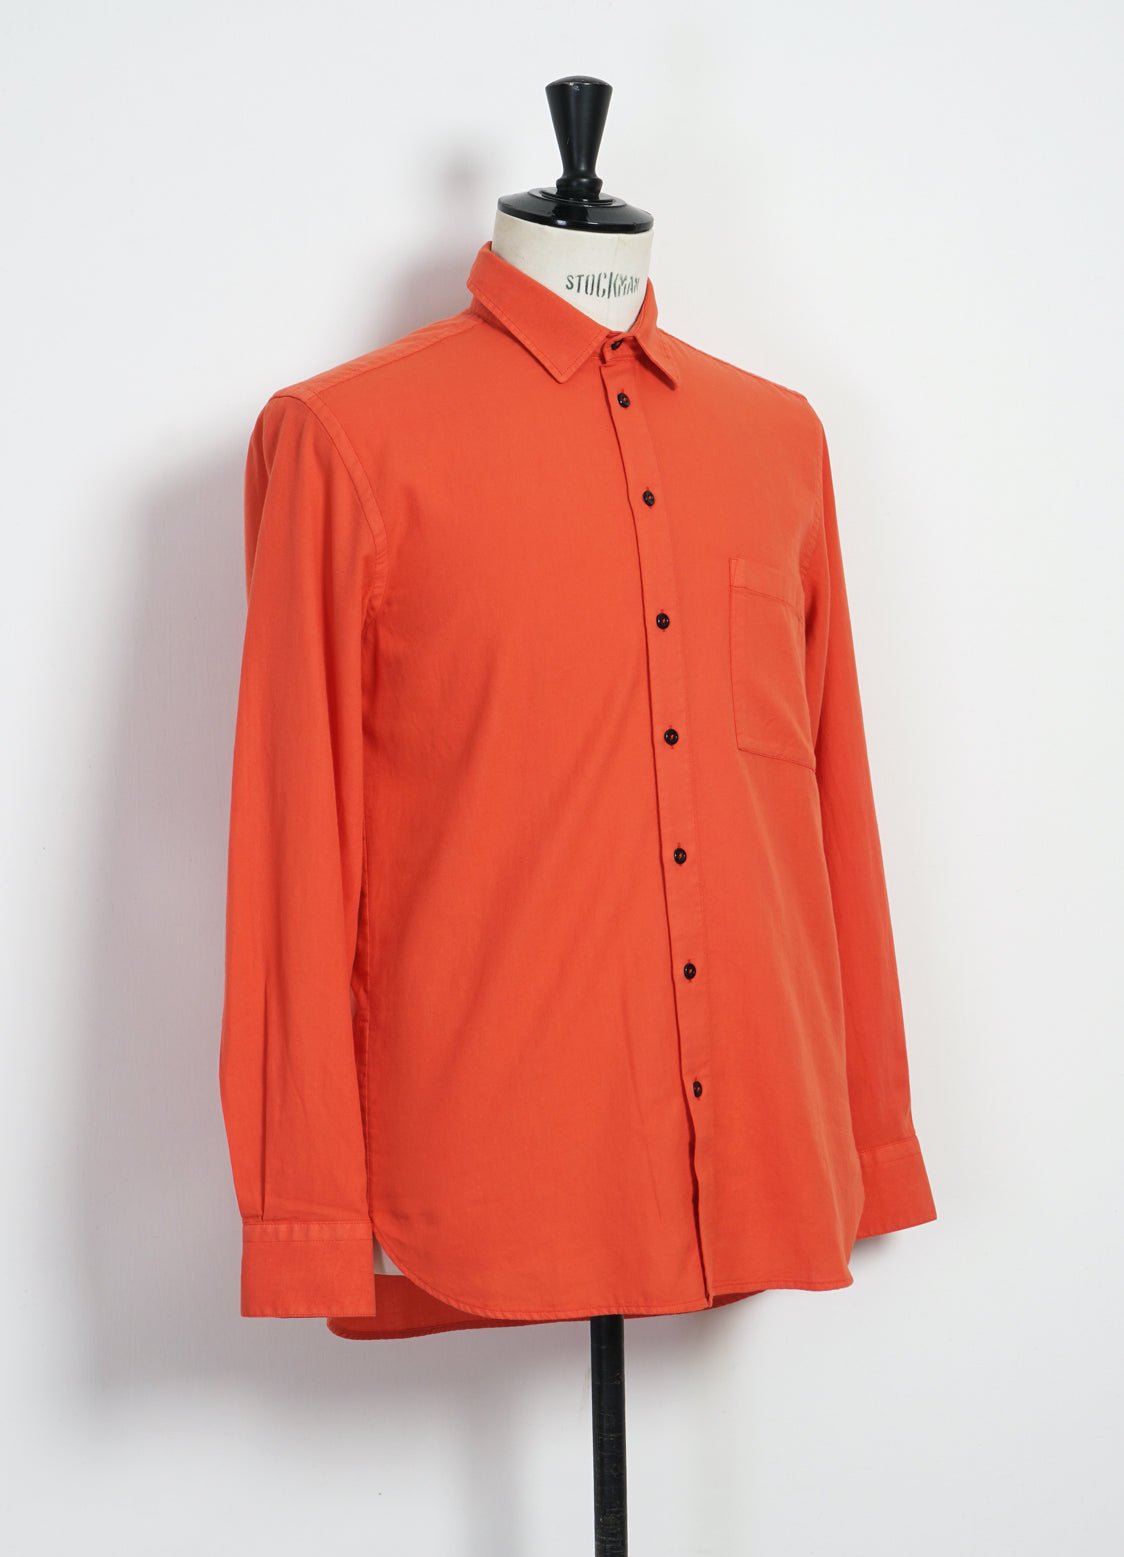 HANSEN GARMENTS - HENNING | Casual Classic Shirt | Sparks - HANSEN Garments